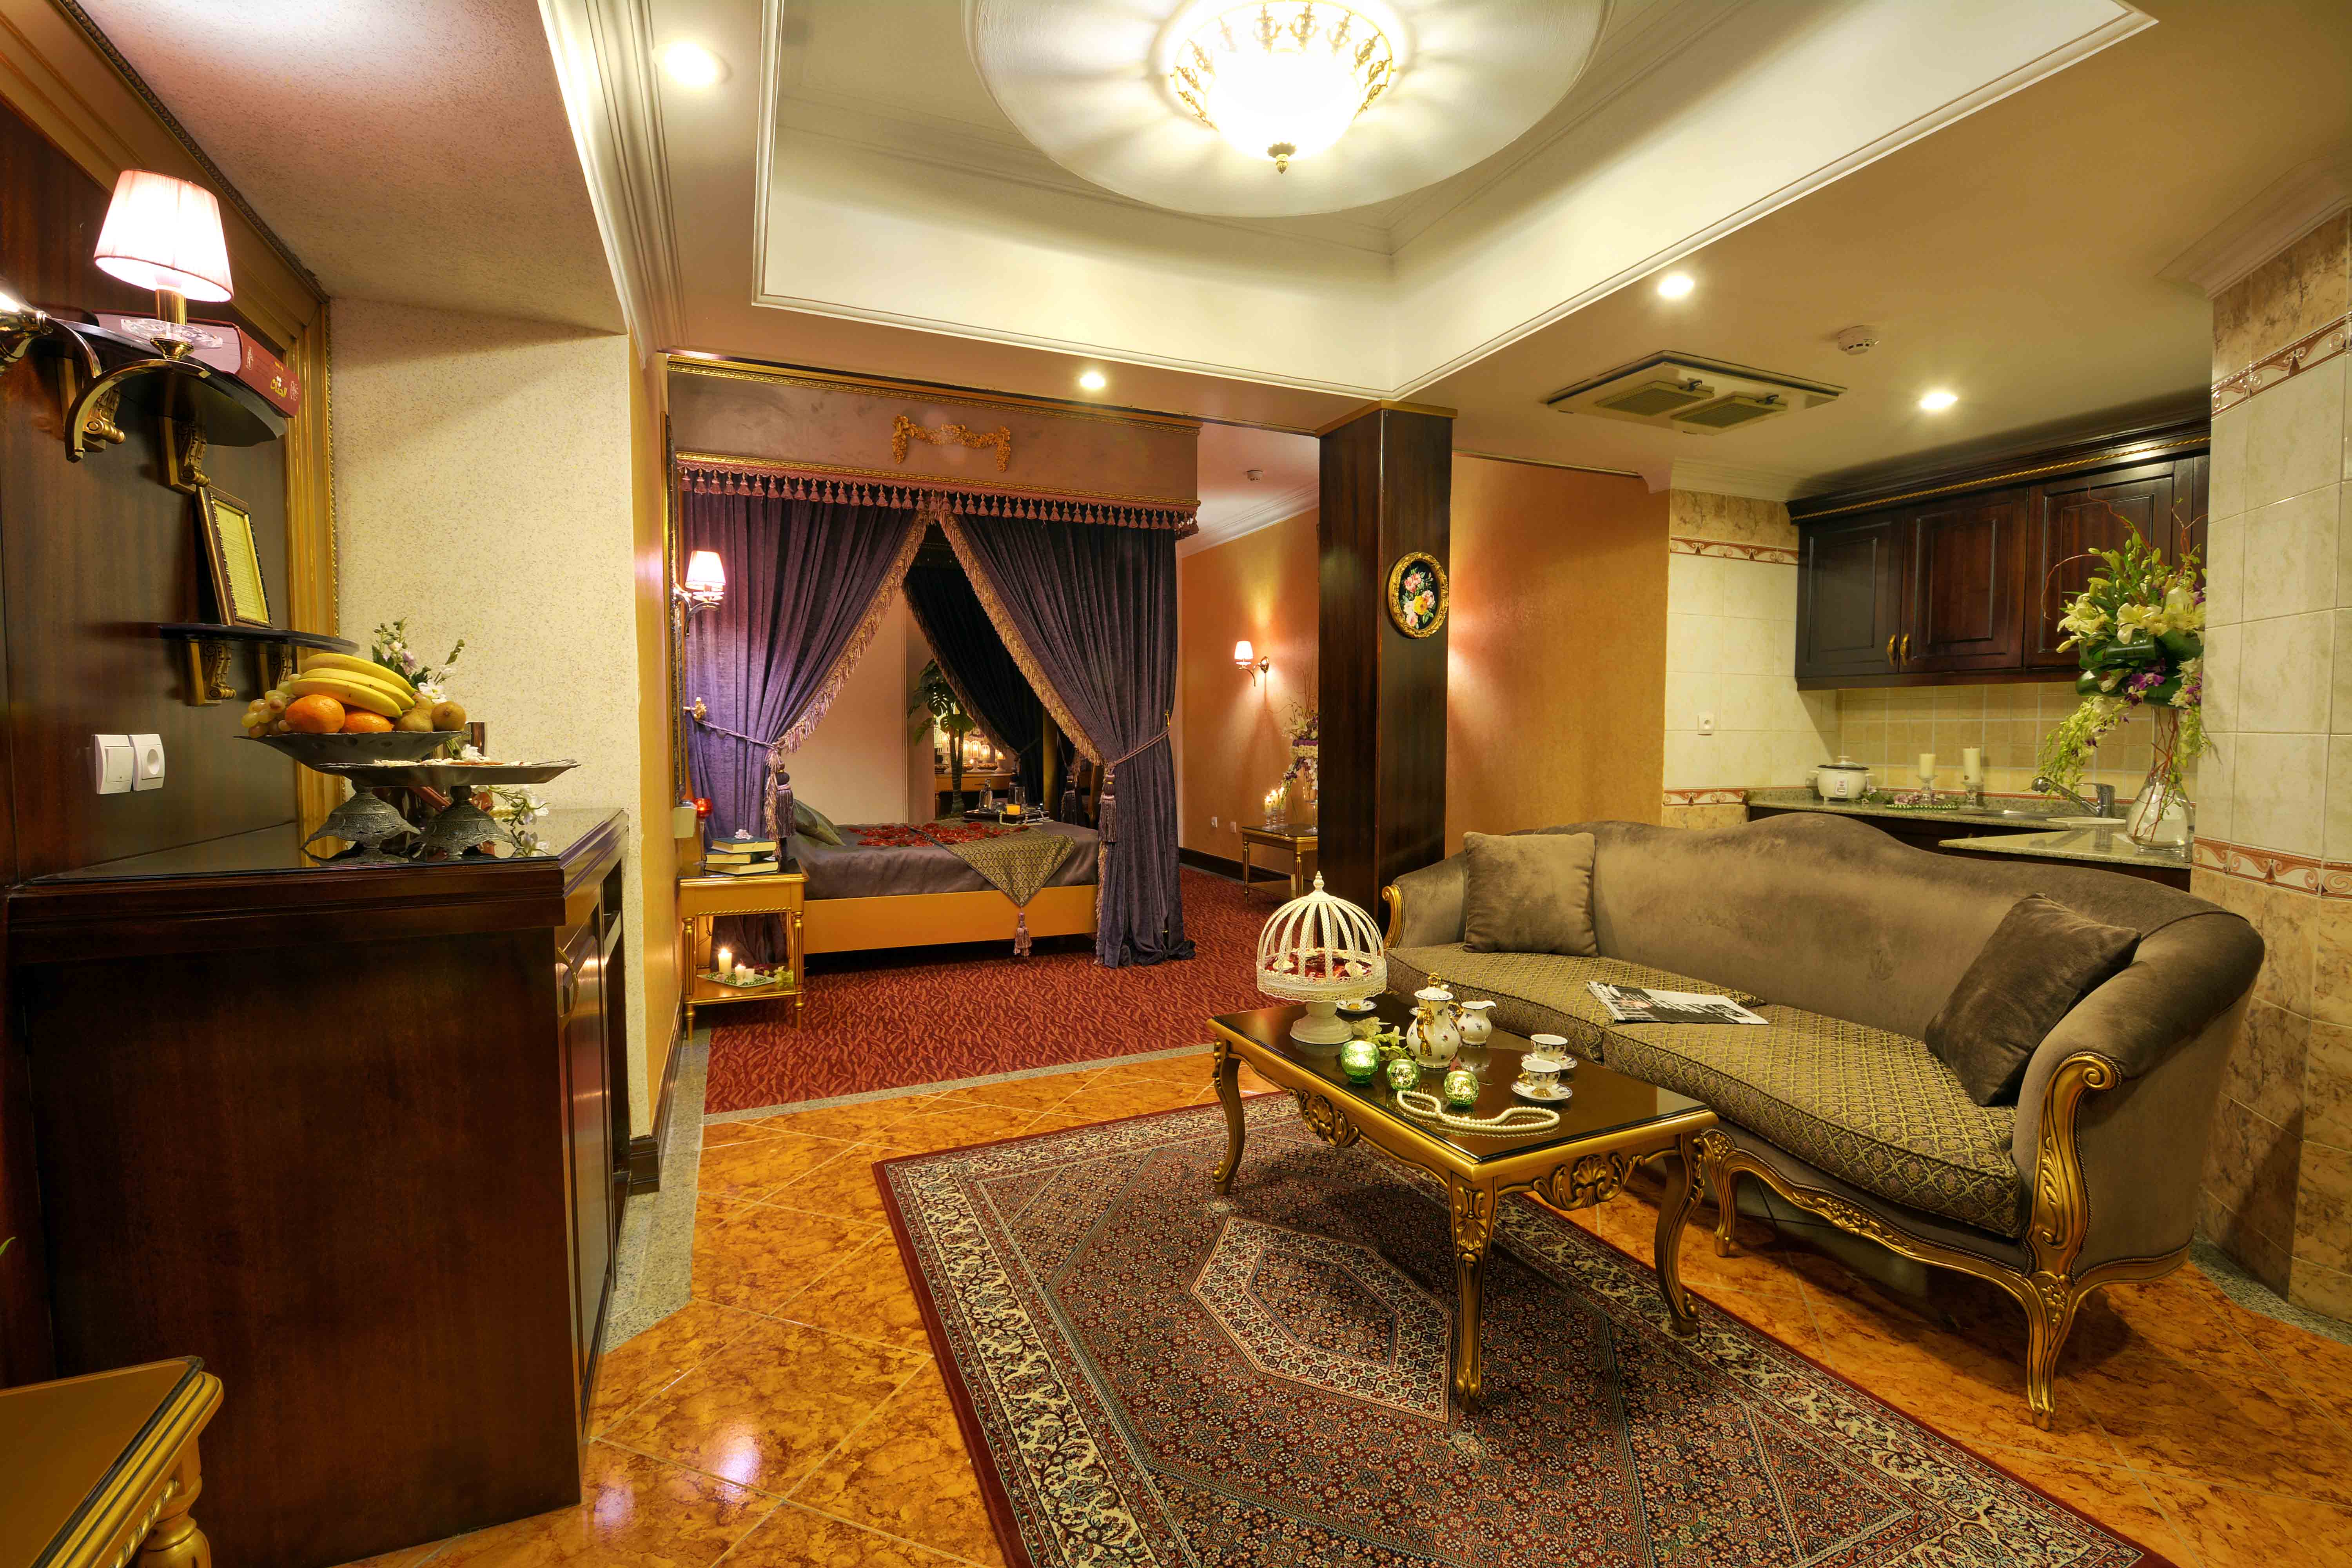  هتل بین المللی قصر مشهد